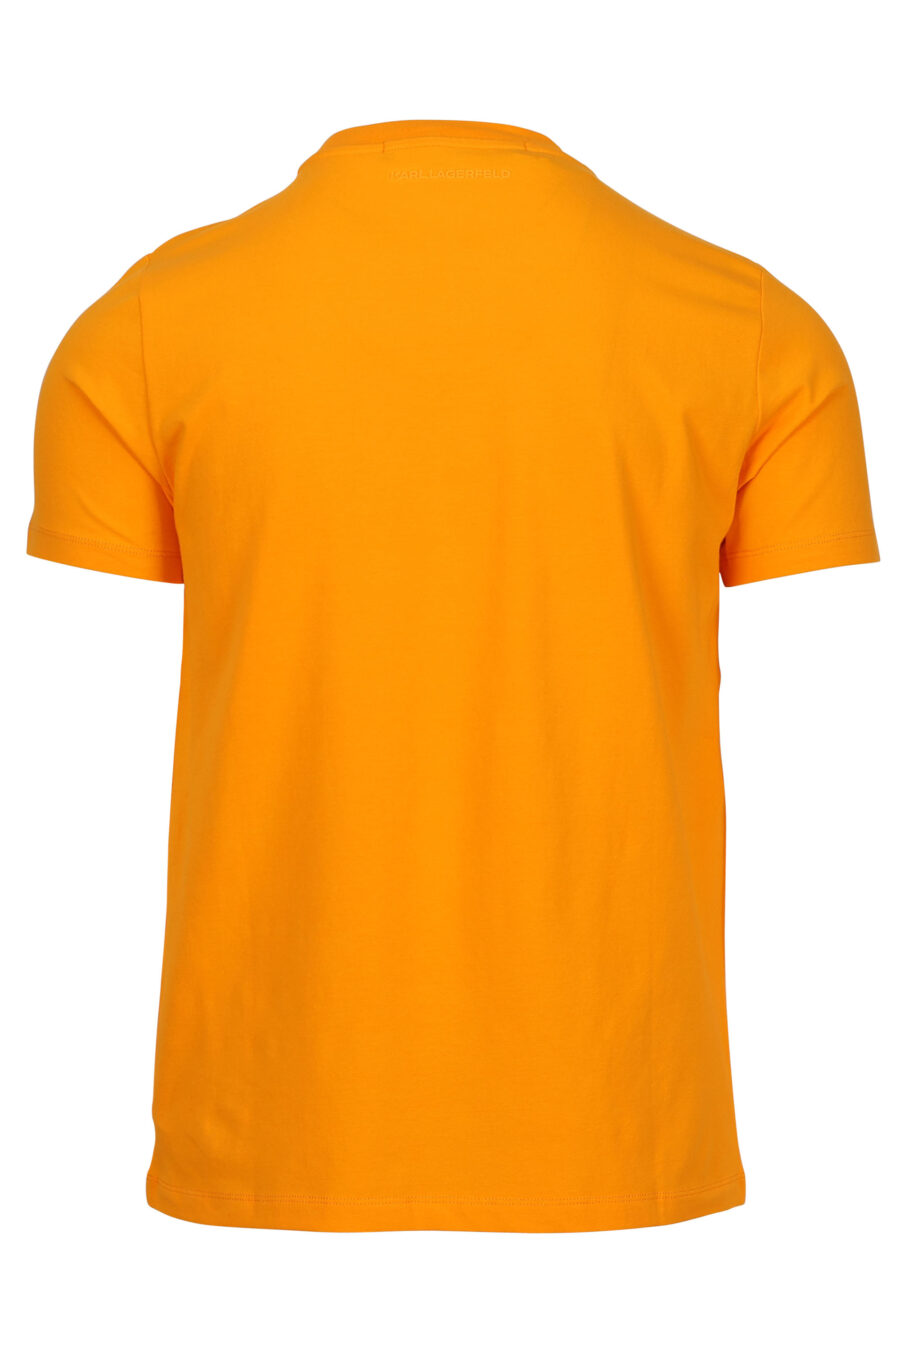 Camiseta naranja con minilogo placa - 4062226958912 1